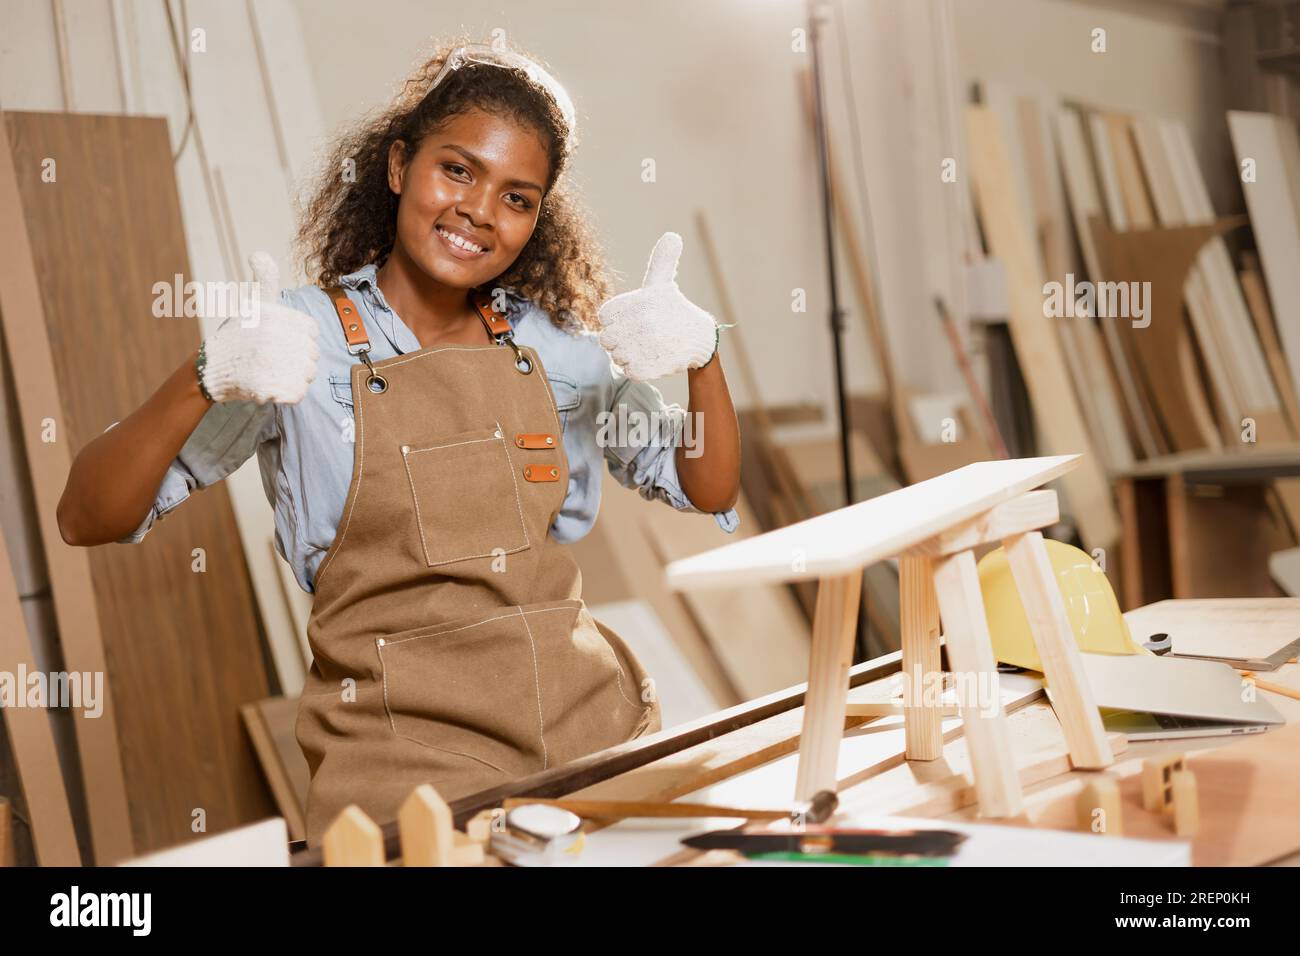 Happy carpenter woman african black smiling in wood workshop enjoy making handmade wooden furniture business. Stock Photo